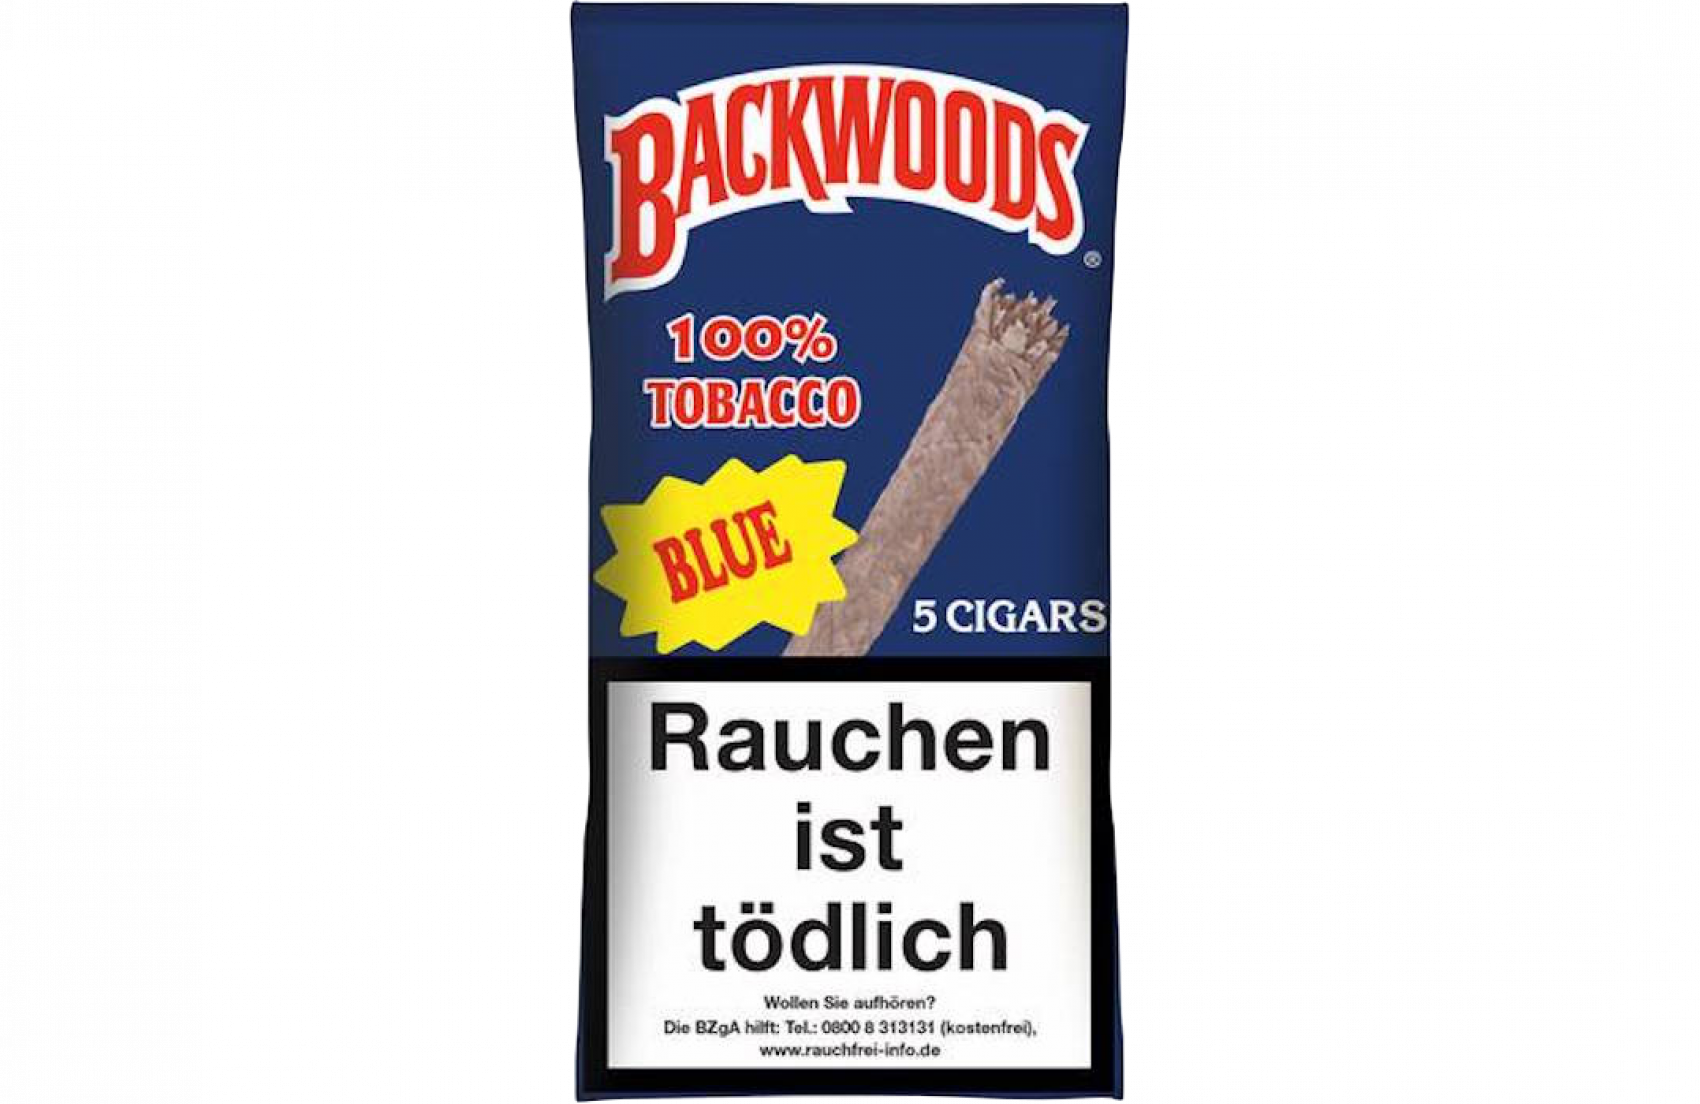 Backwoods Blue Cigars Health Warning